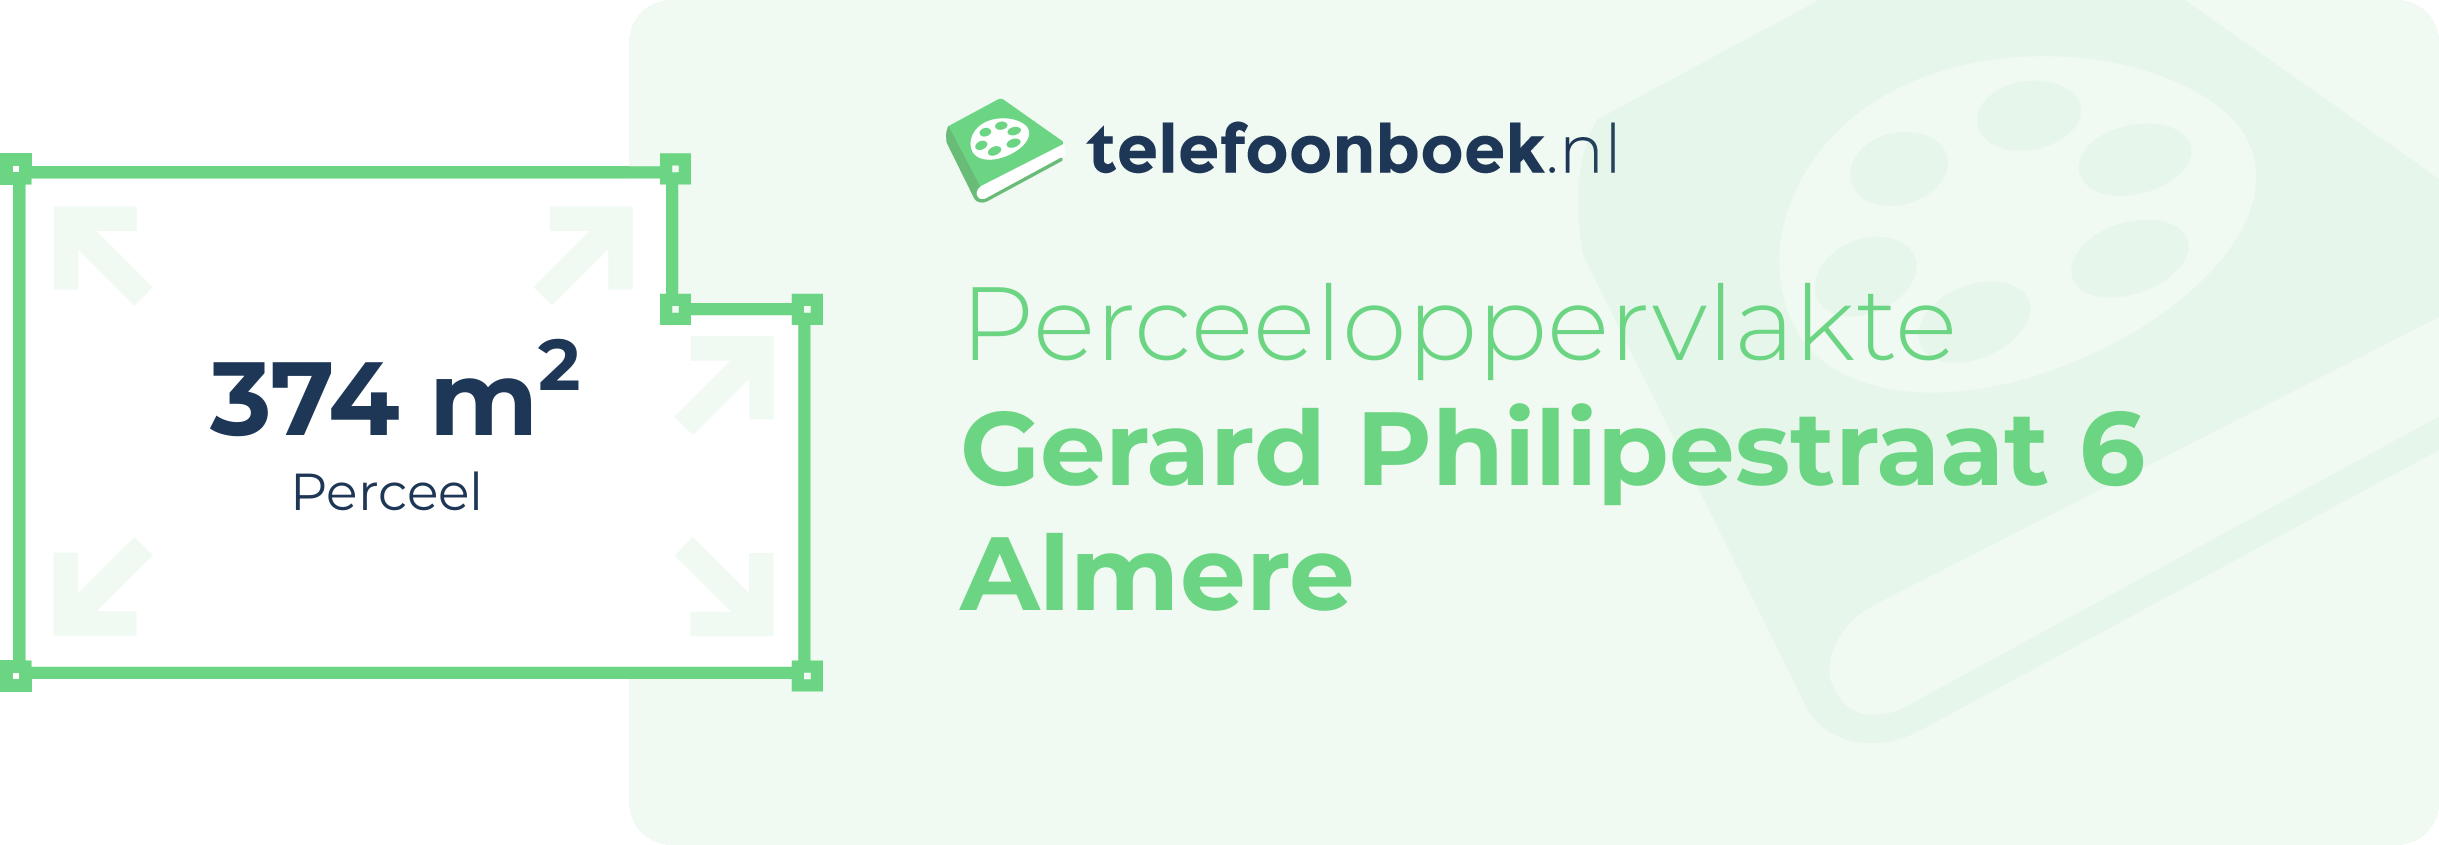 Perceeloppervlakte Gerard Philipestraat 6 Almere